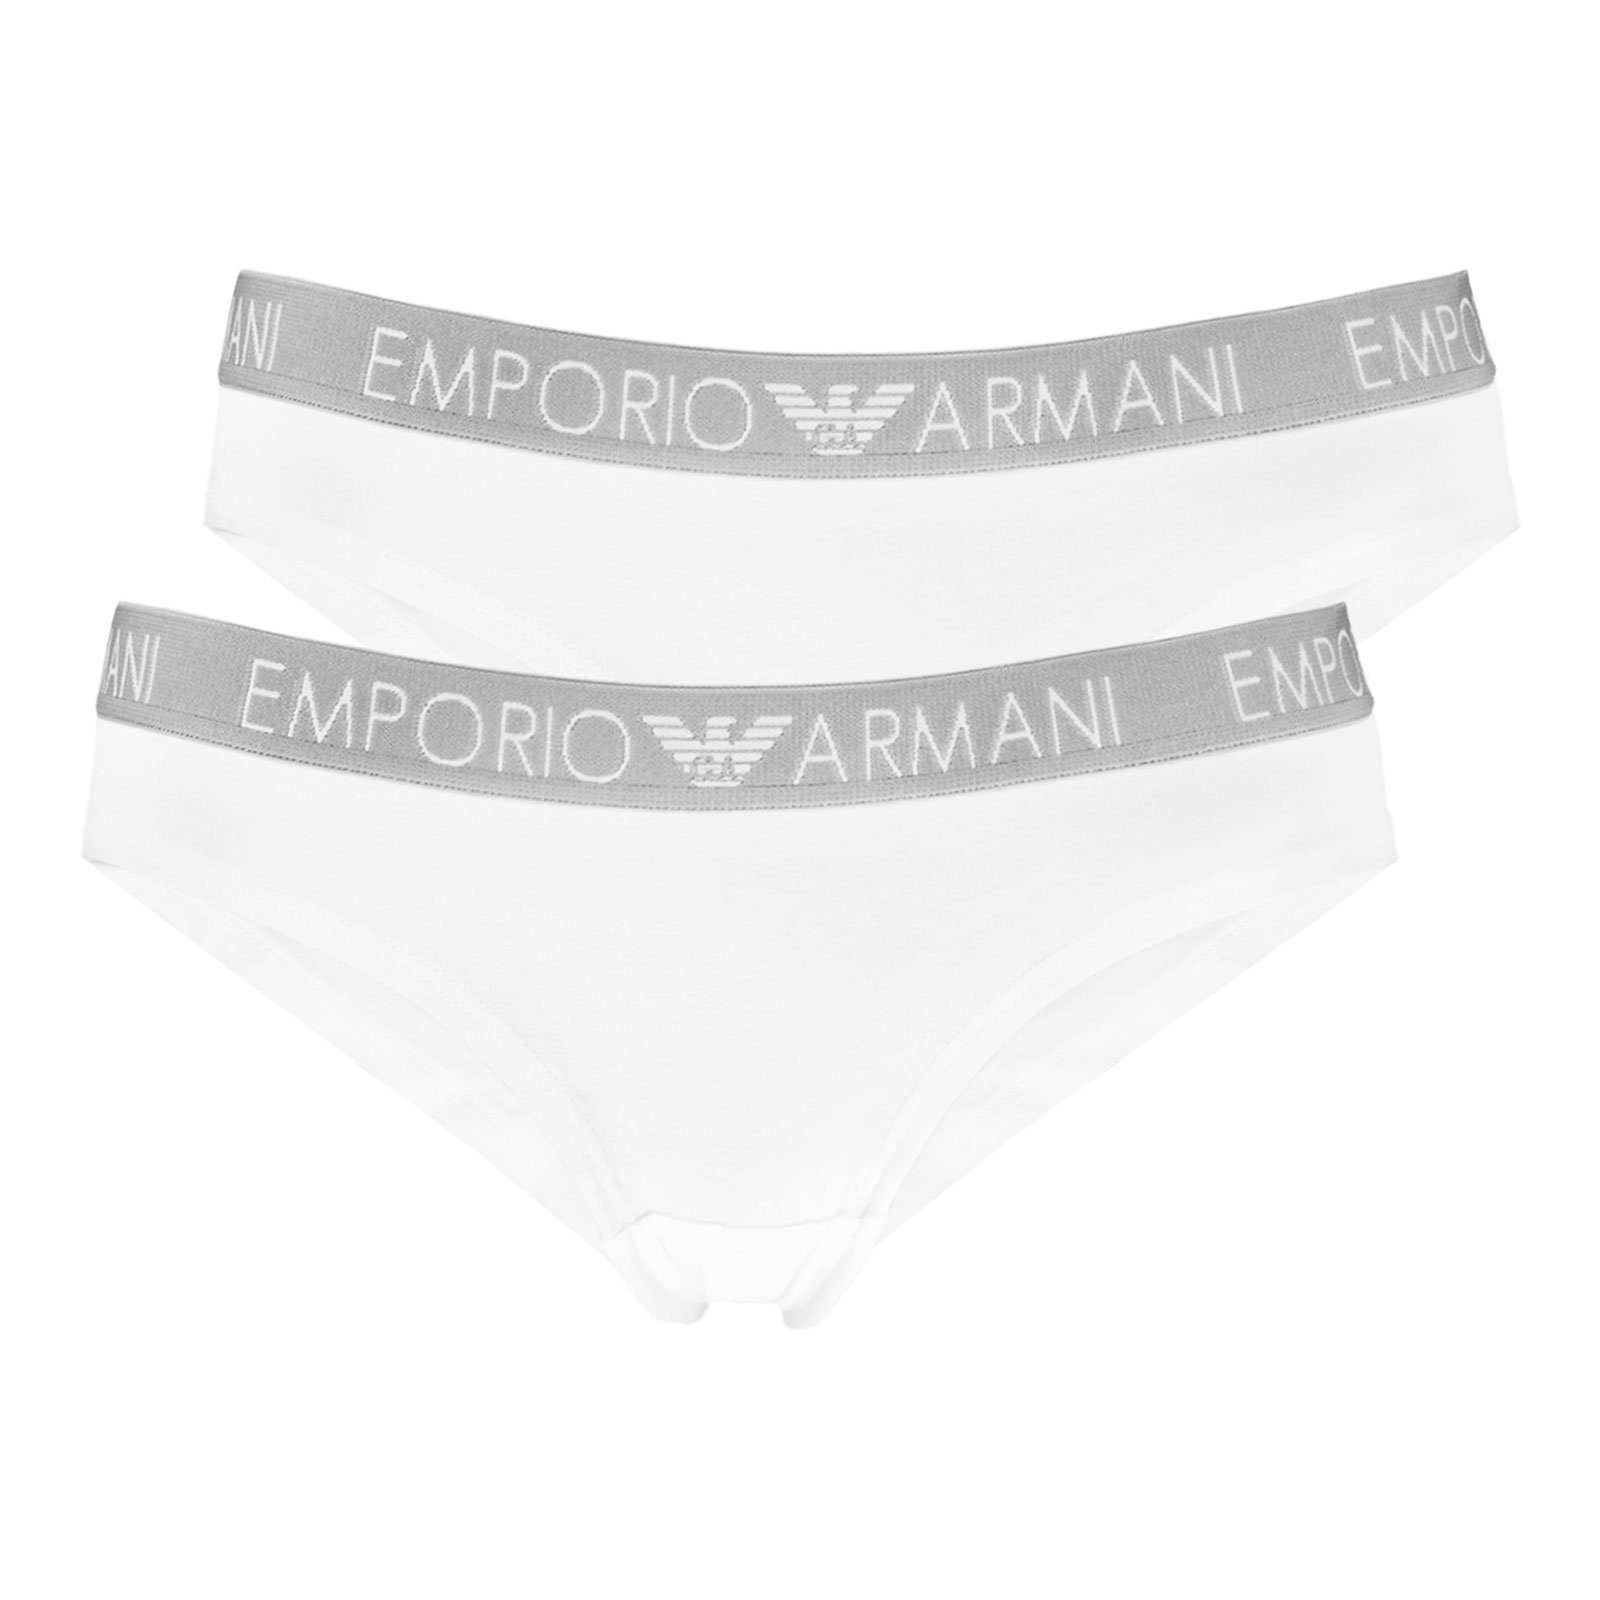 Nahtverlauf Brazilian Emporio Iconic Armani white (2-St) Slip mit / white flachem 04710 Cotton Brief